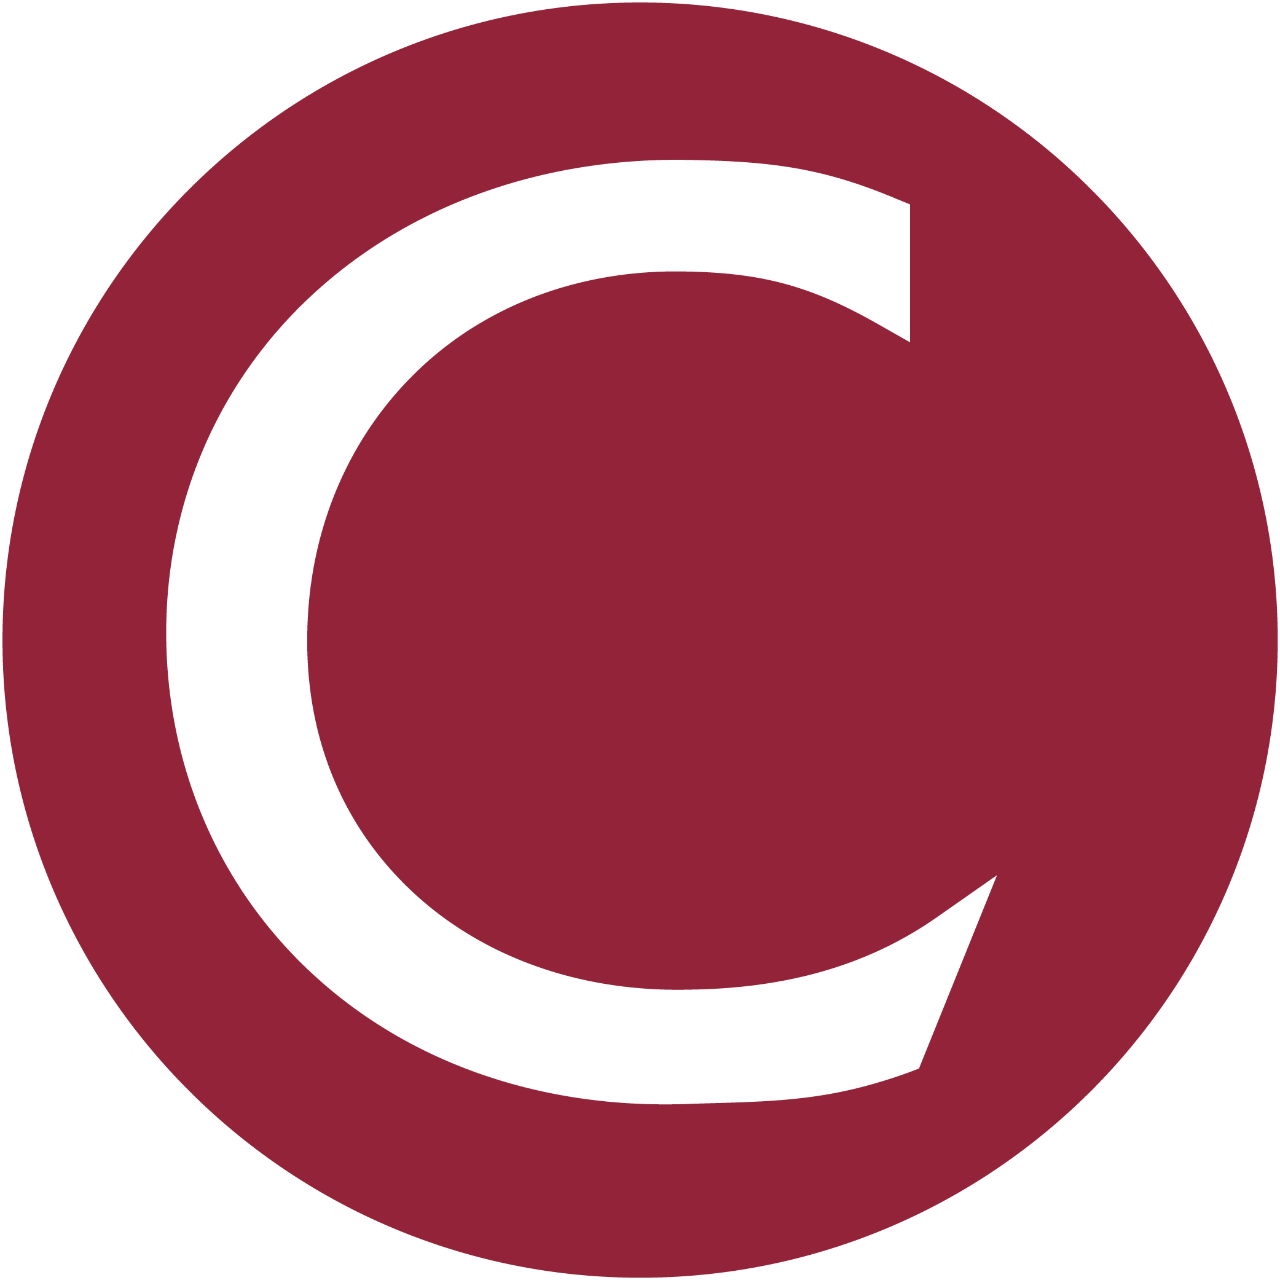 concordia university logo - Zohair Ansari